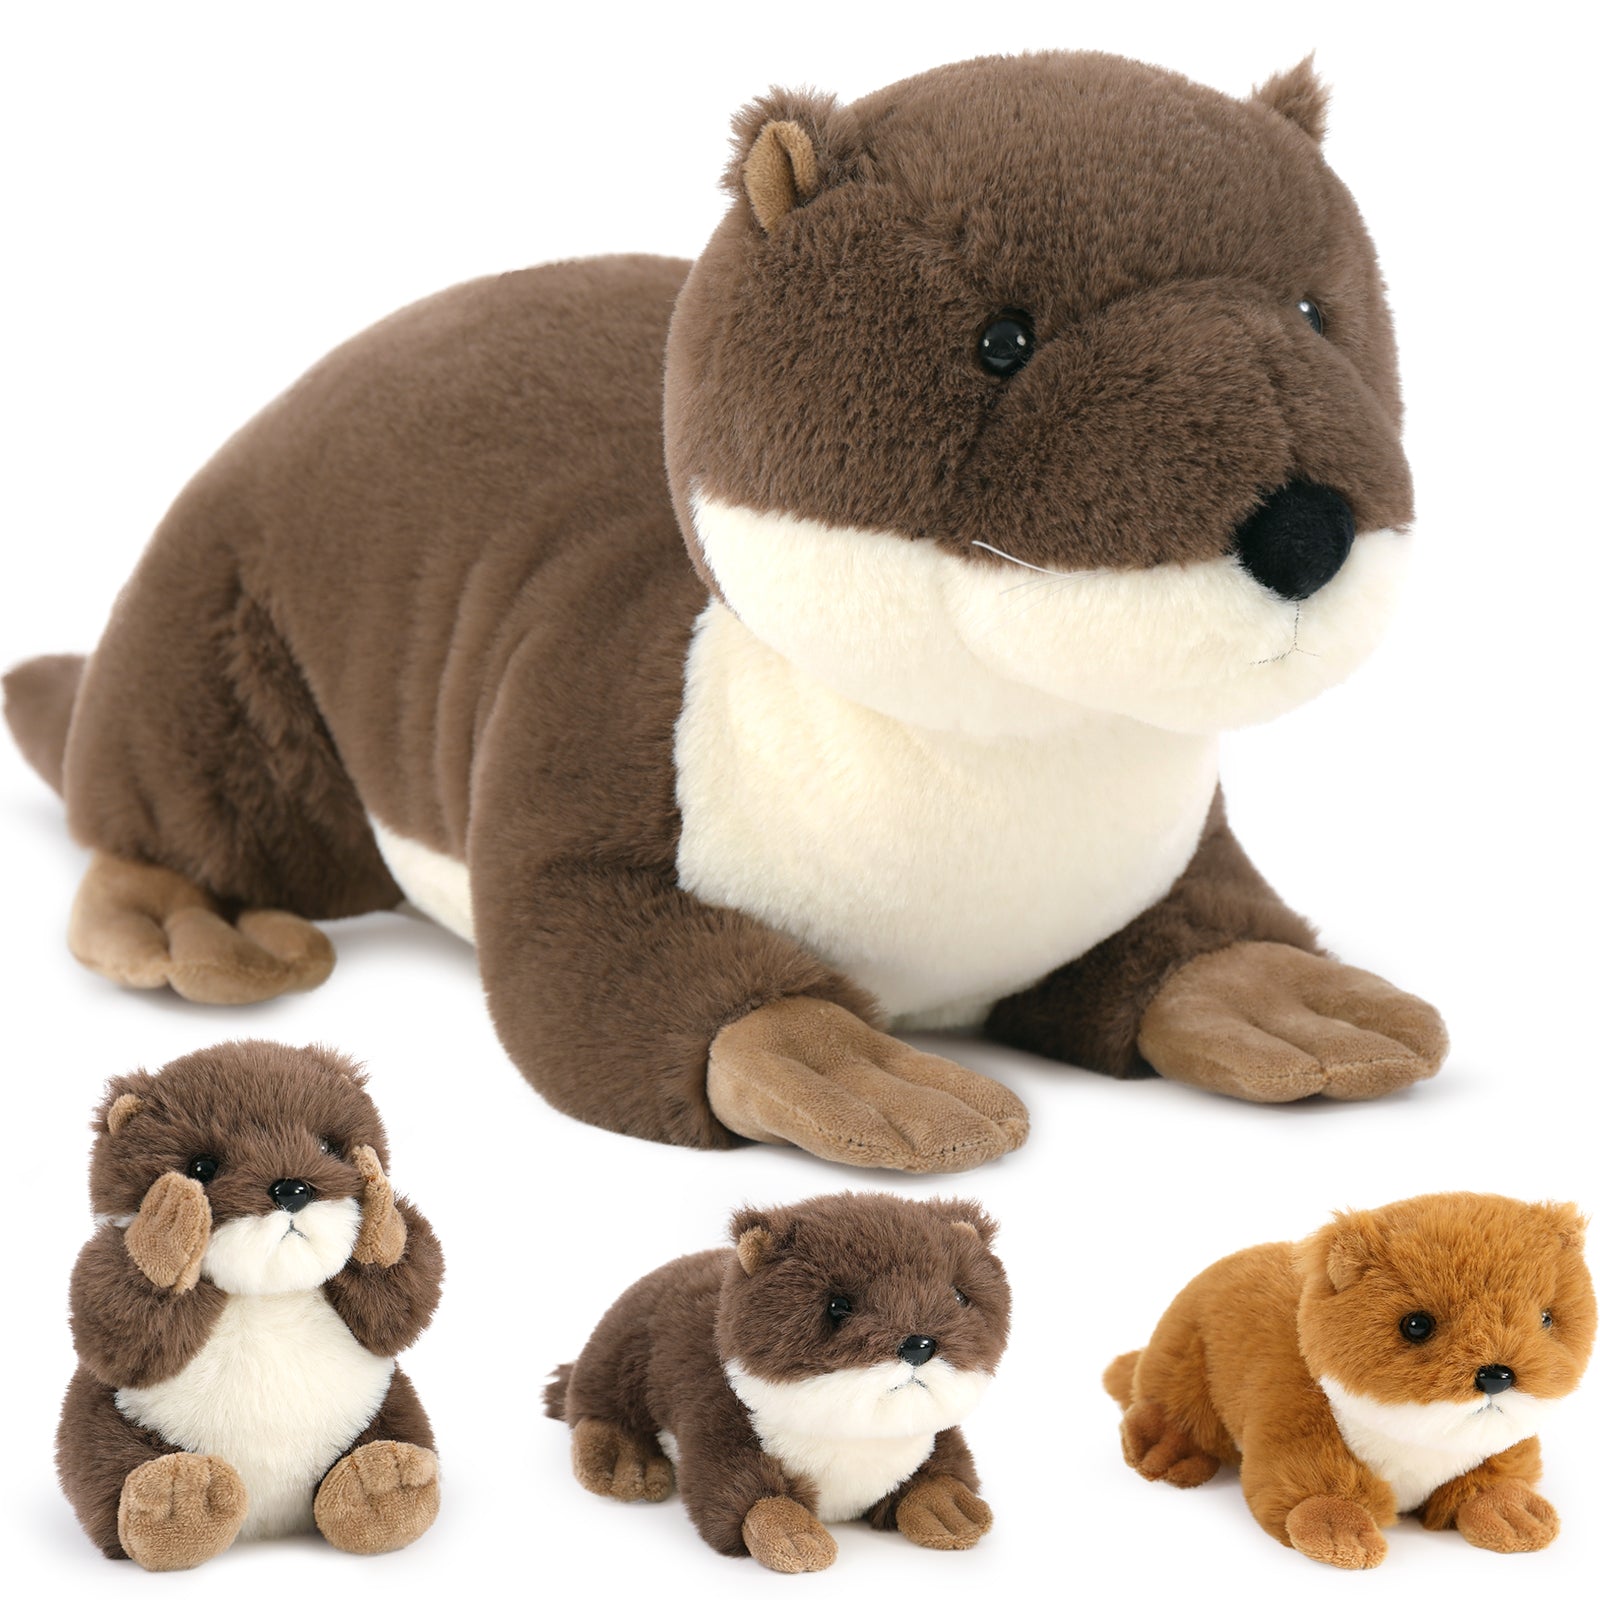 River Otter Plush Toys, Dark Brown, 23.6 Inches